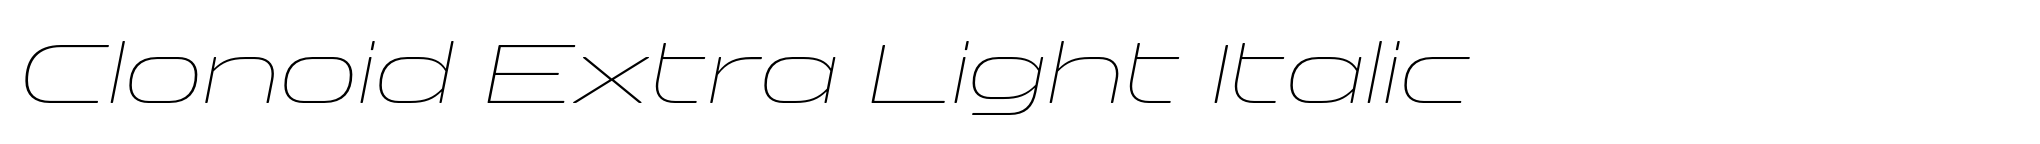 Clonoid Extra Light Italic image